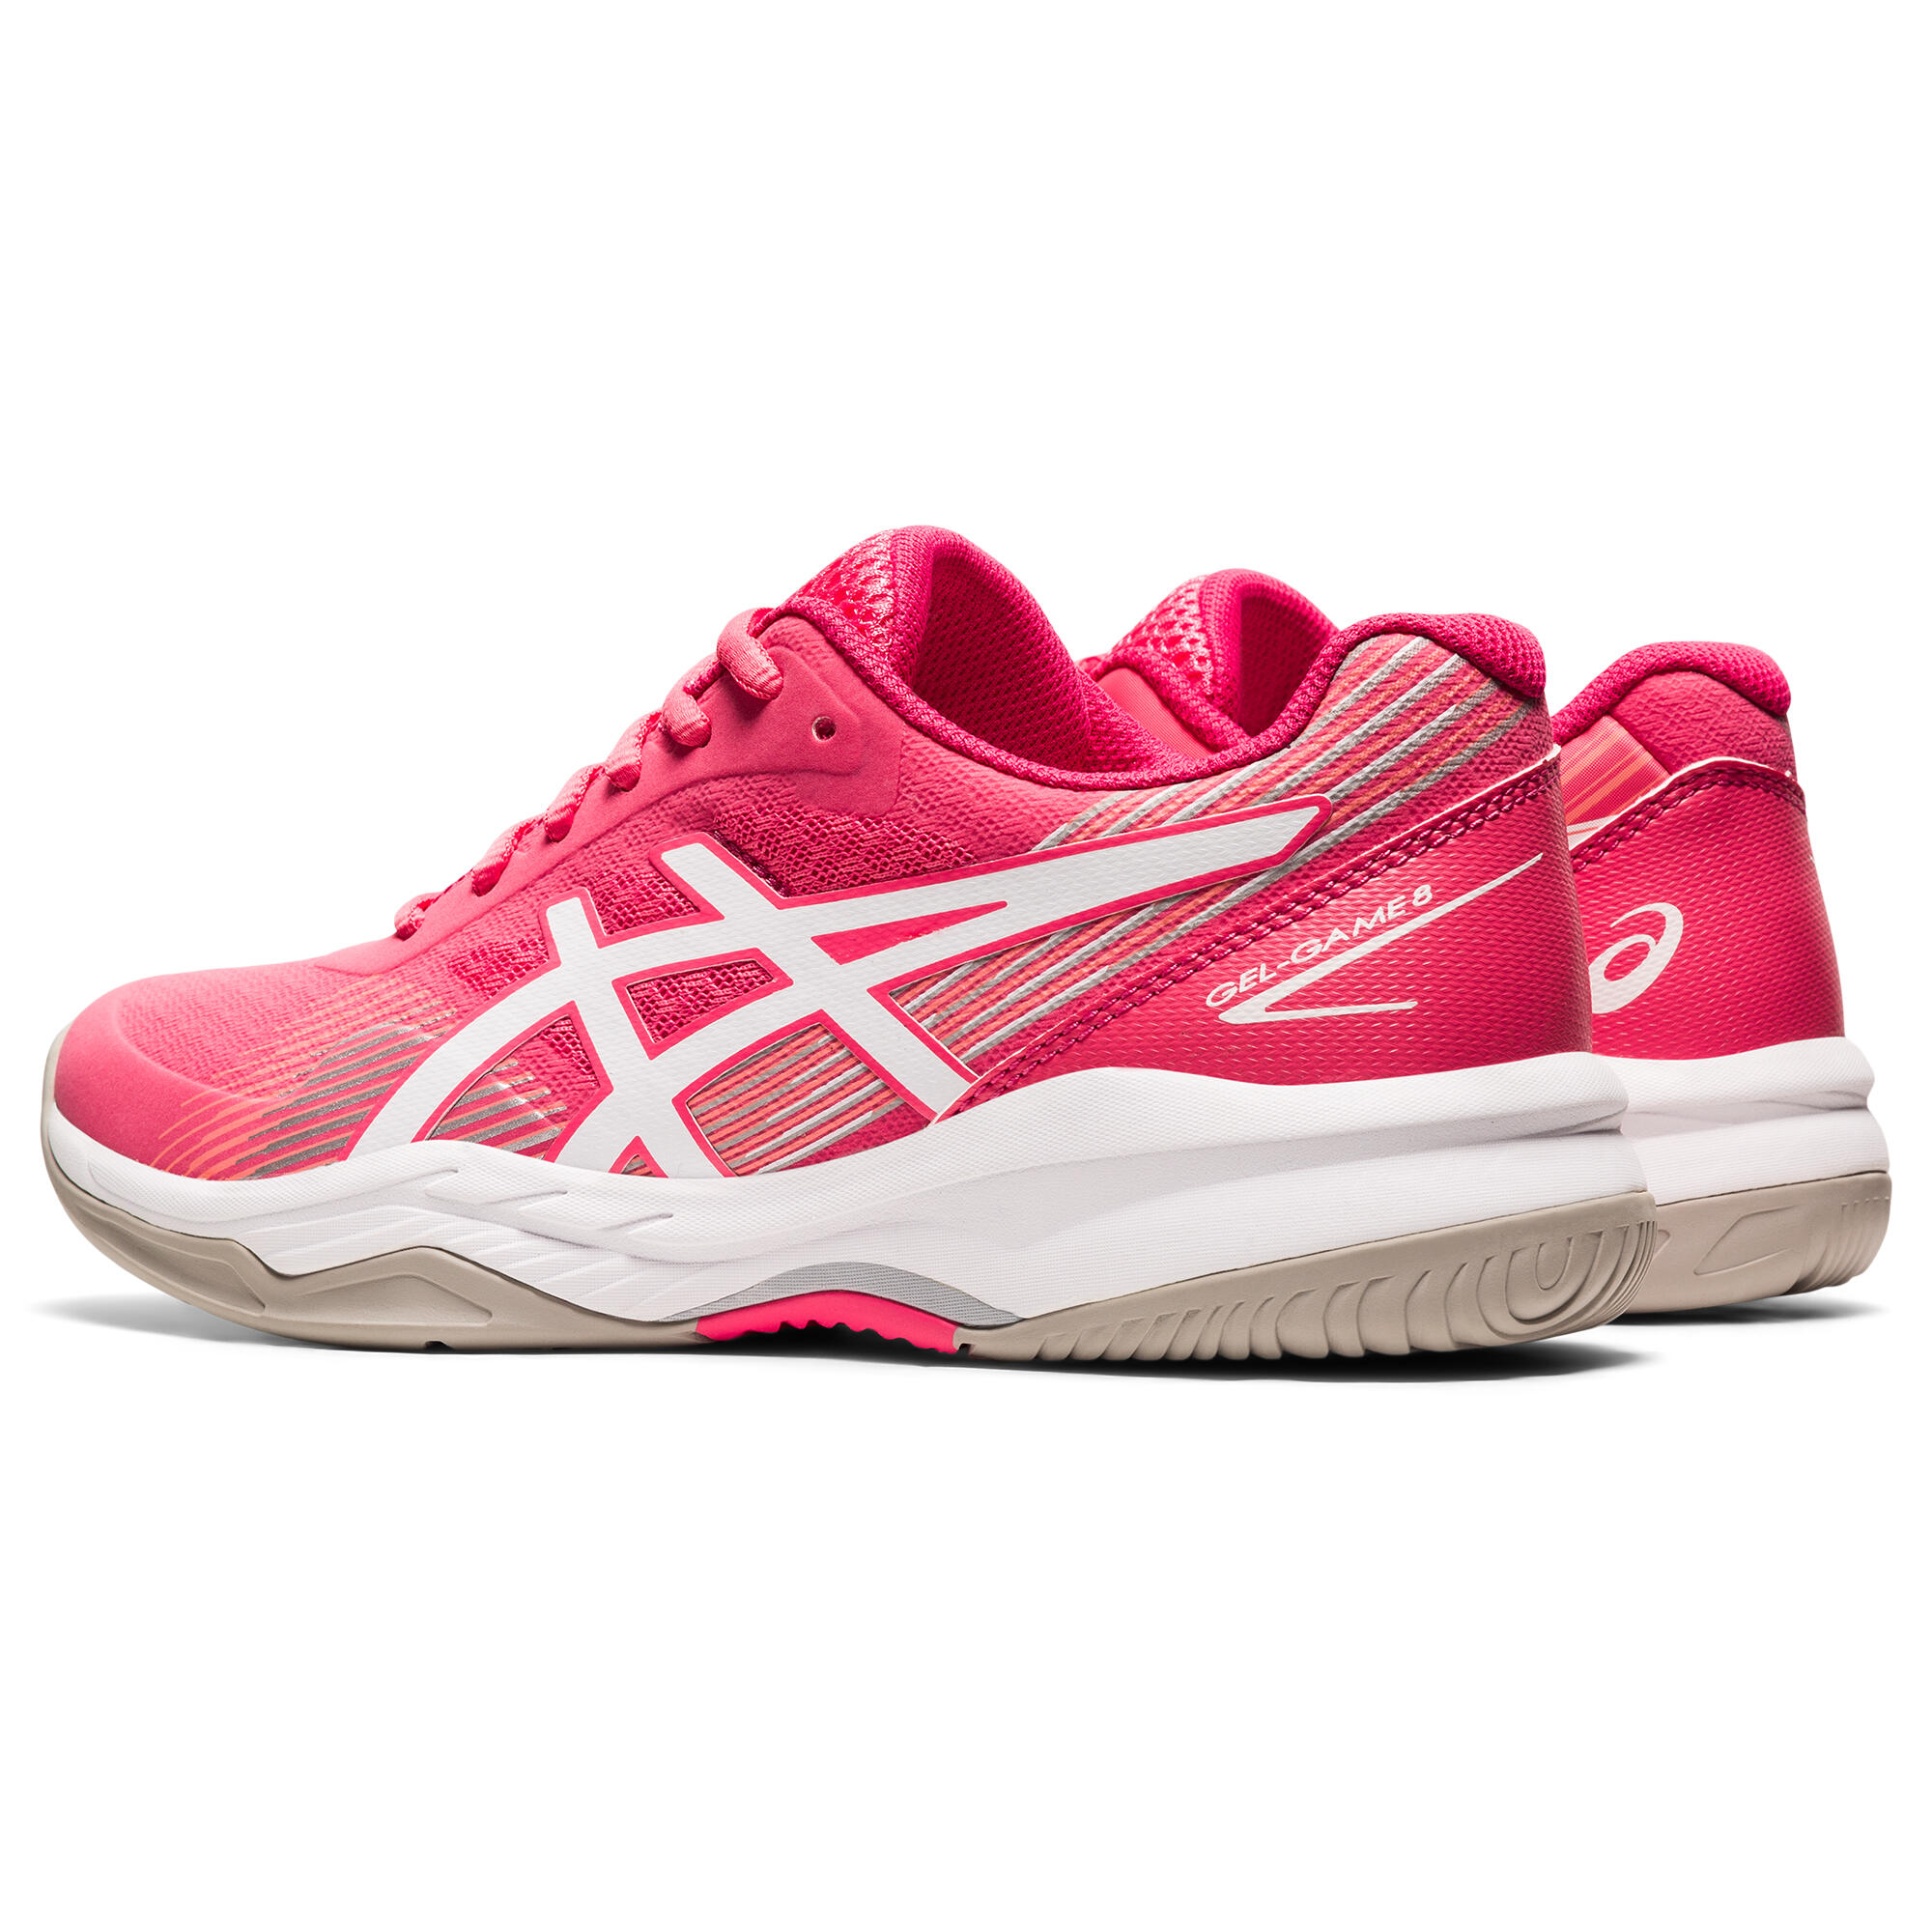 Women's Tennis Shoes Gel Game - Pink/White 4/7